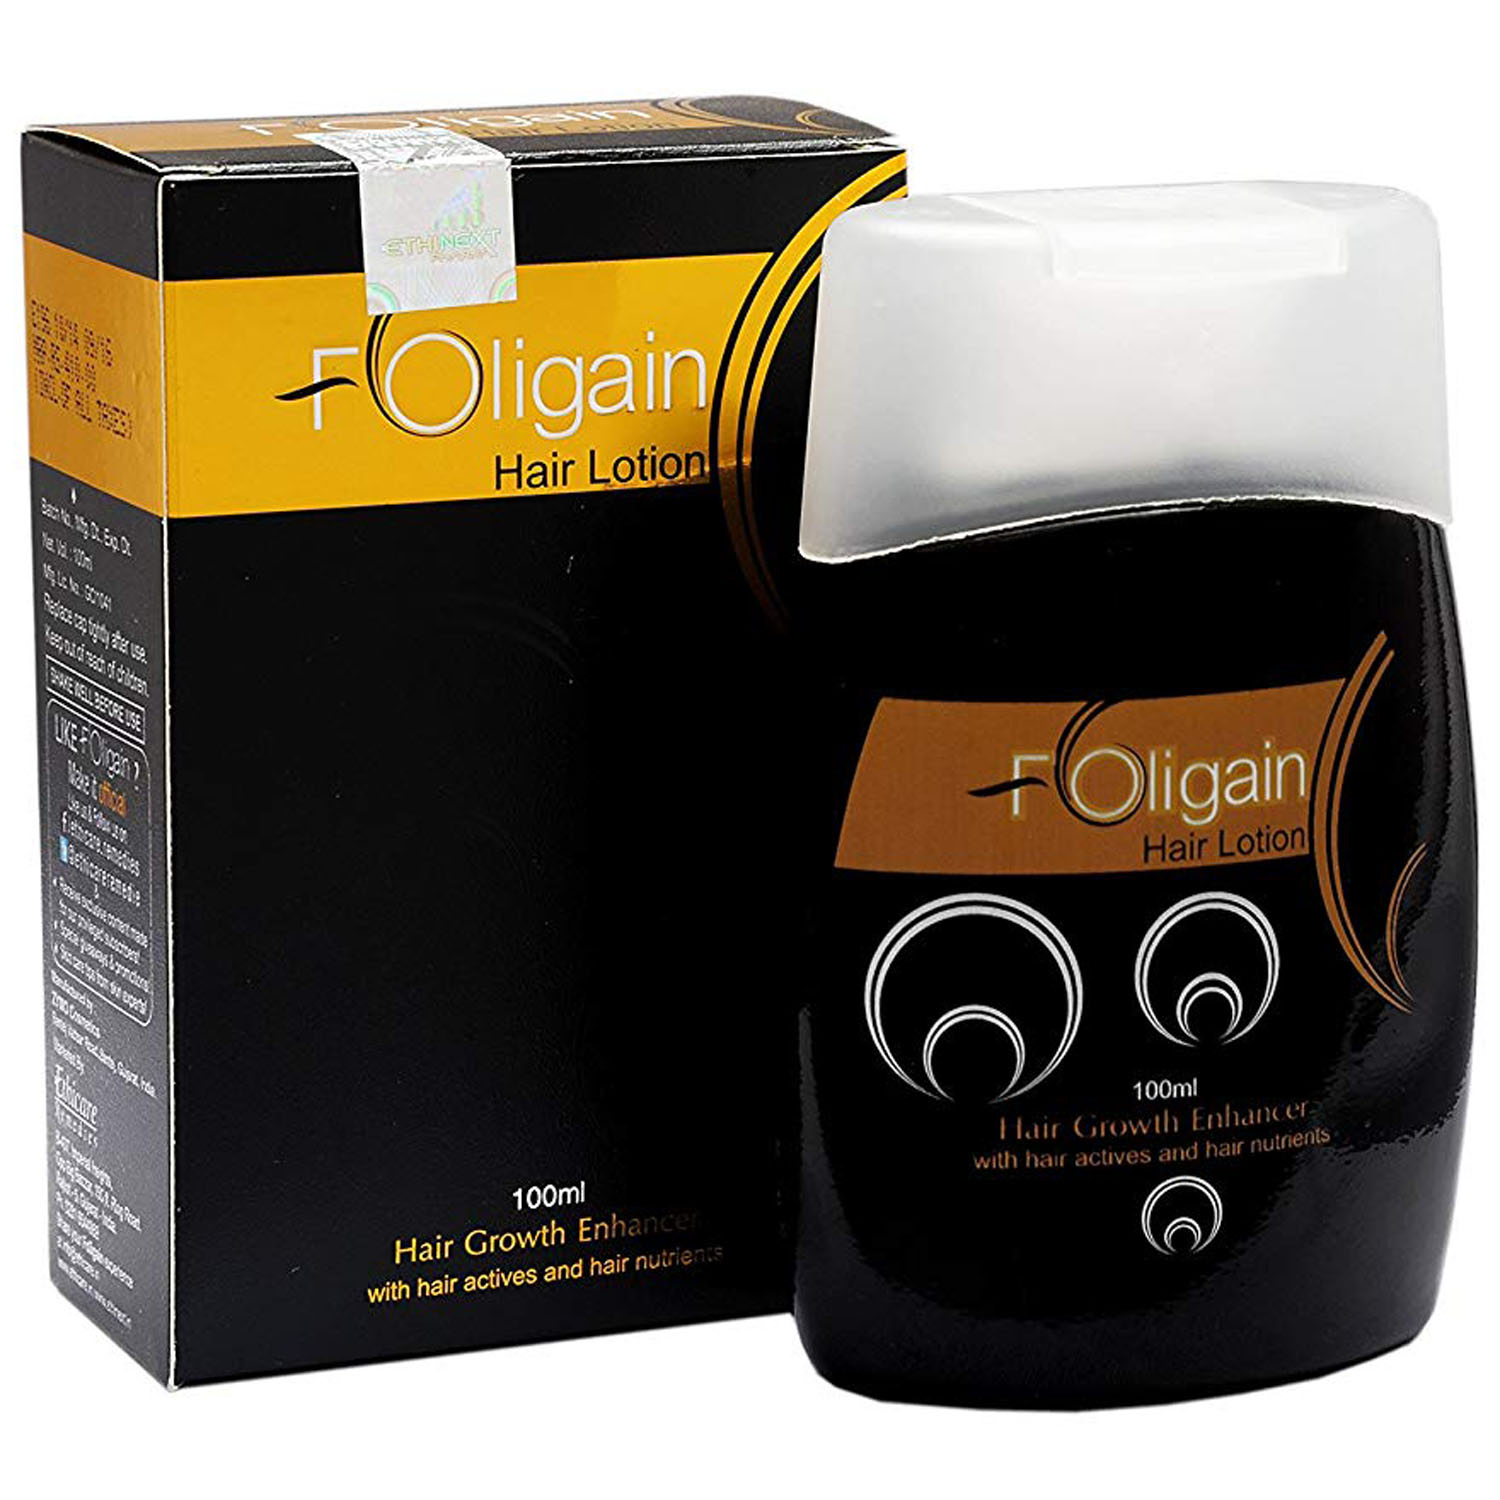 Buy Foligain Hair Lotion, 100 ml Online